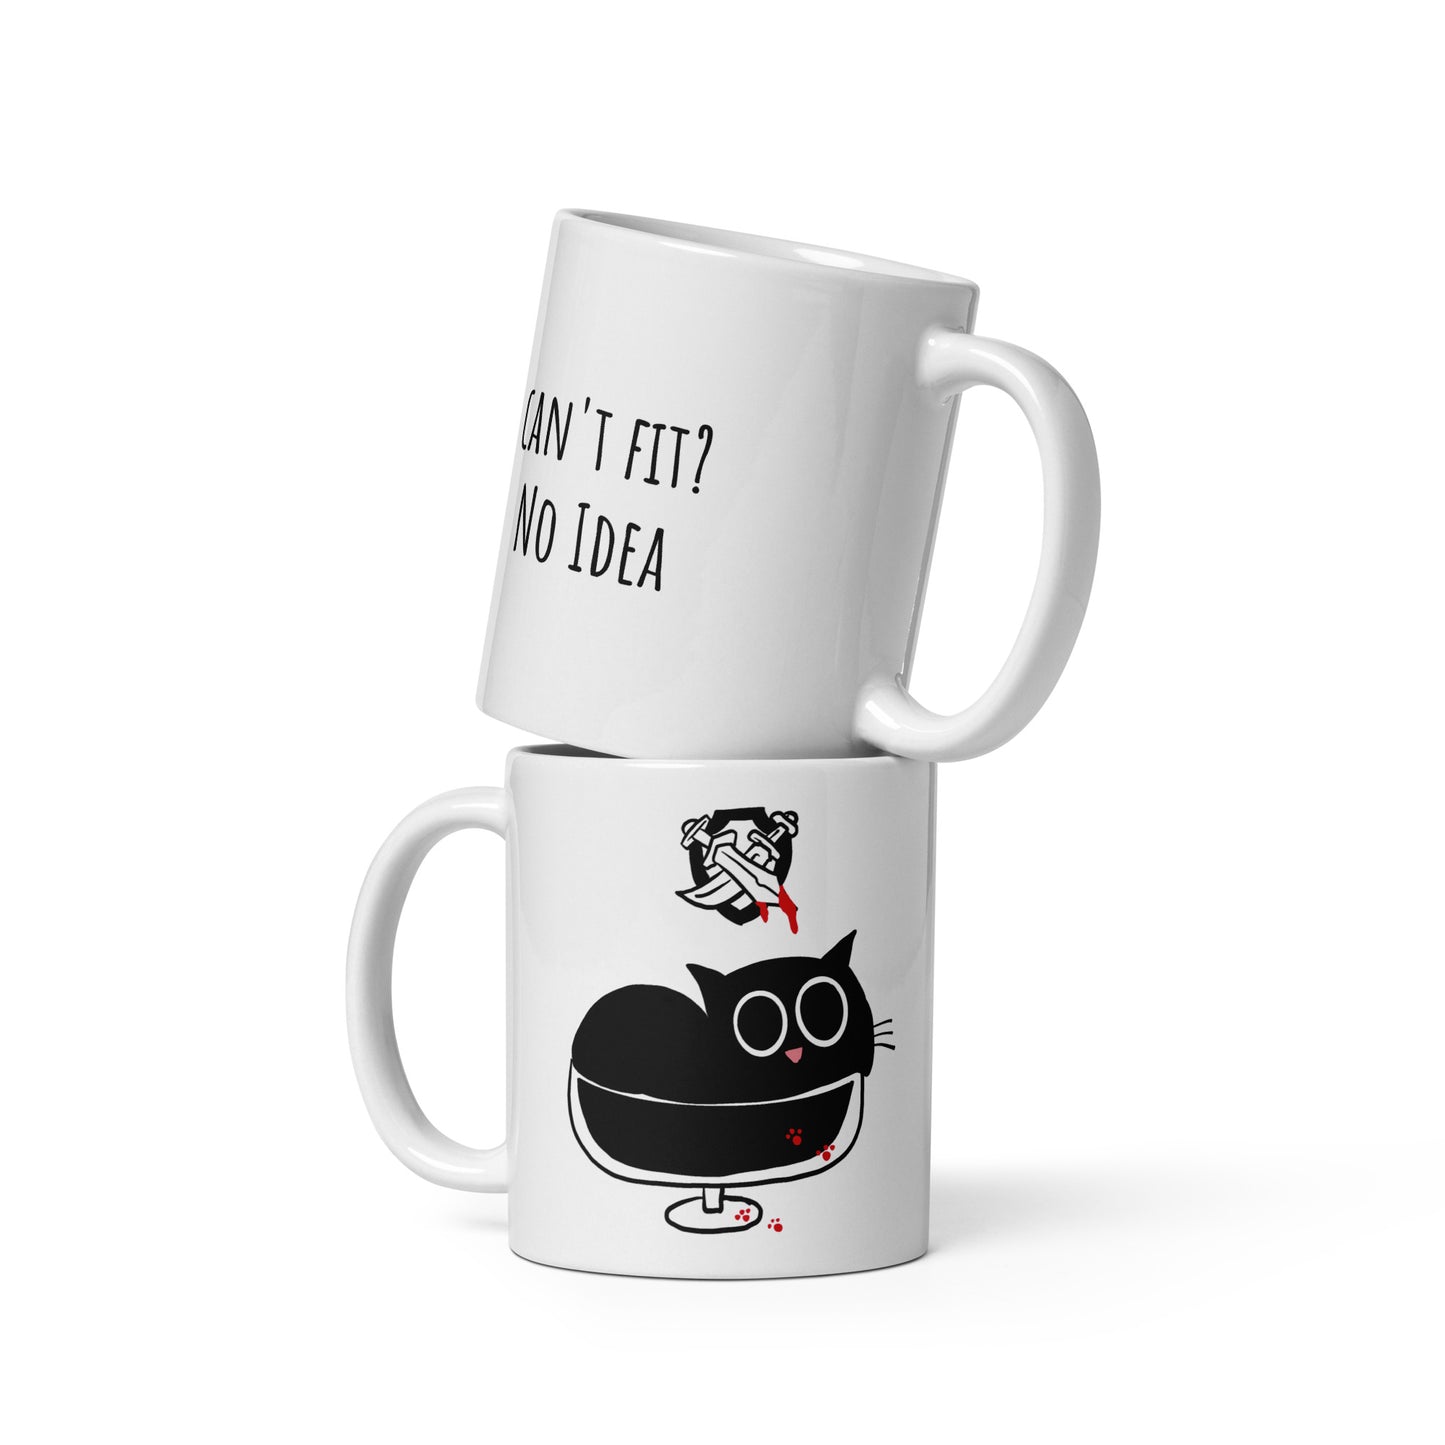 Can't Fit? No Idea - White glossy mug